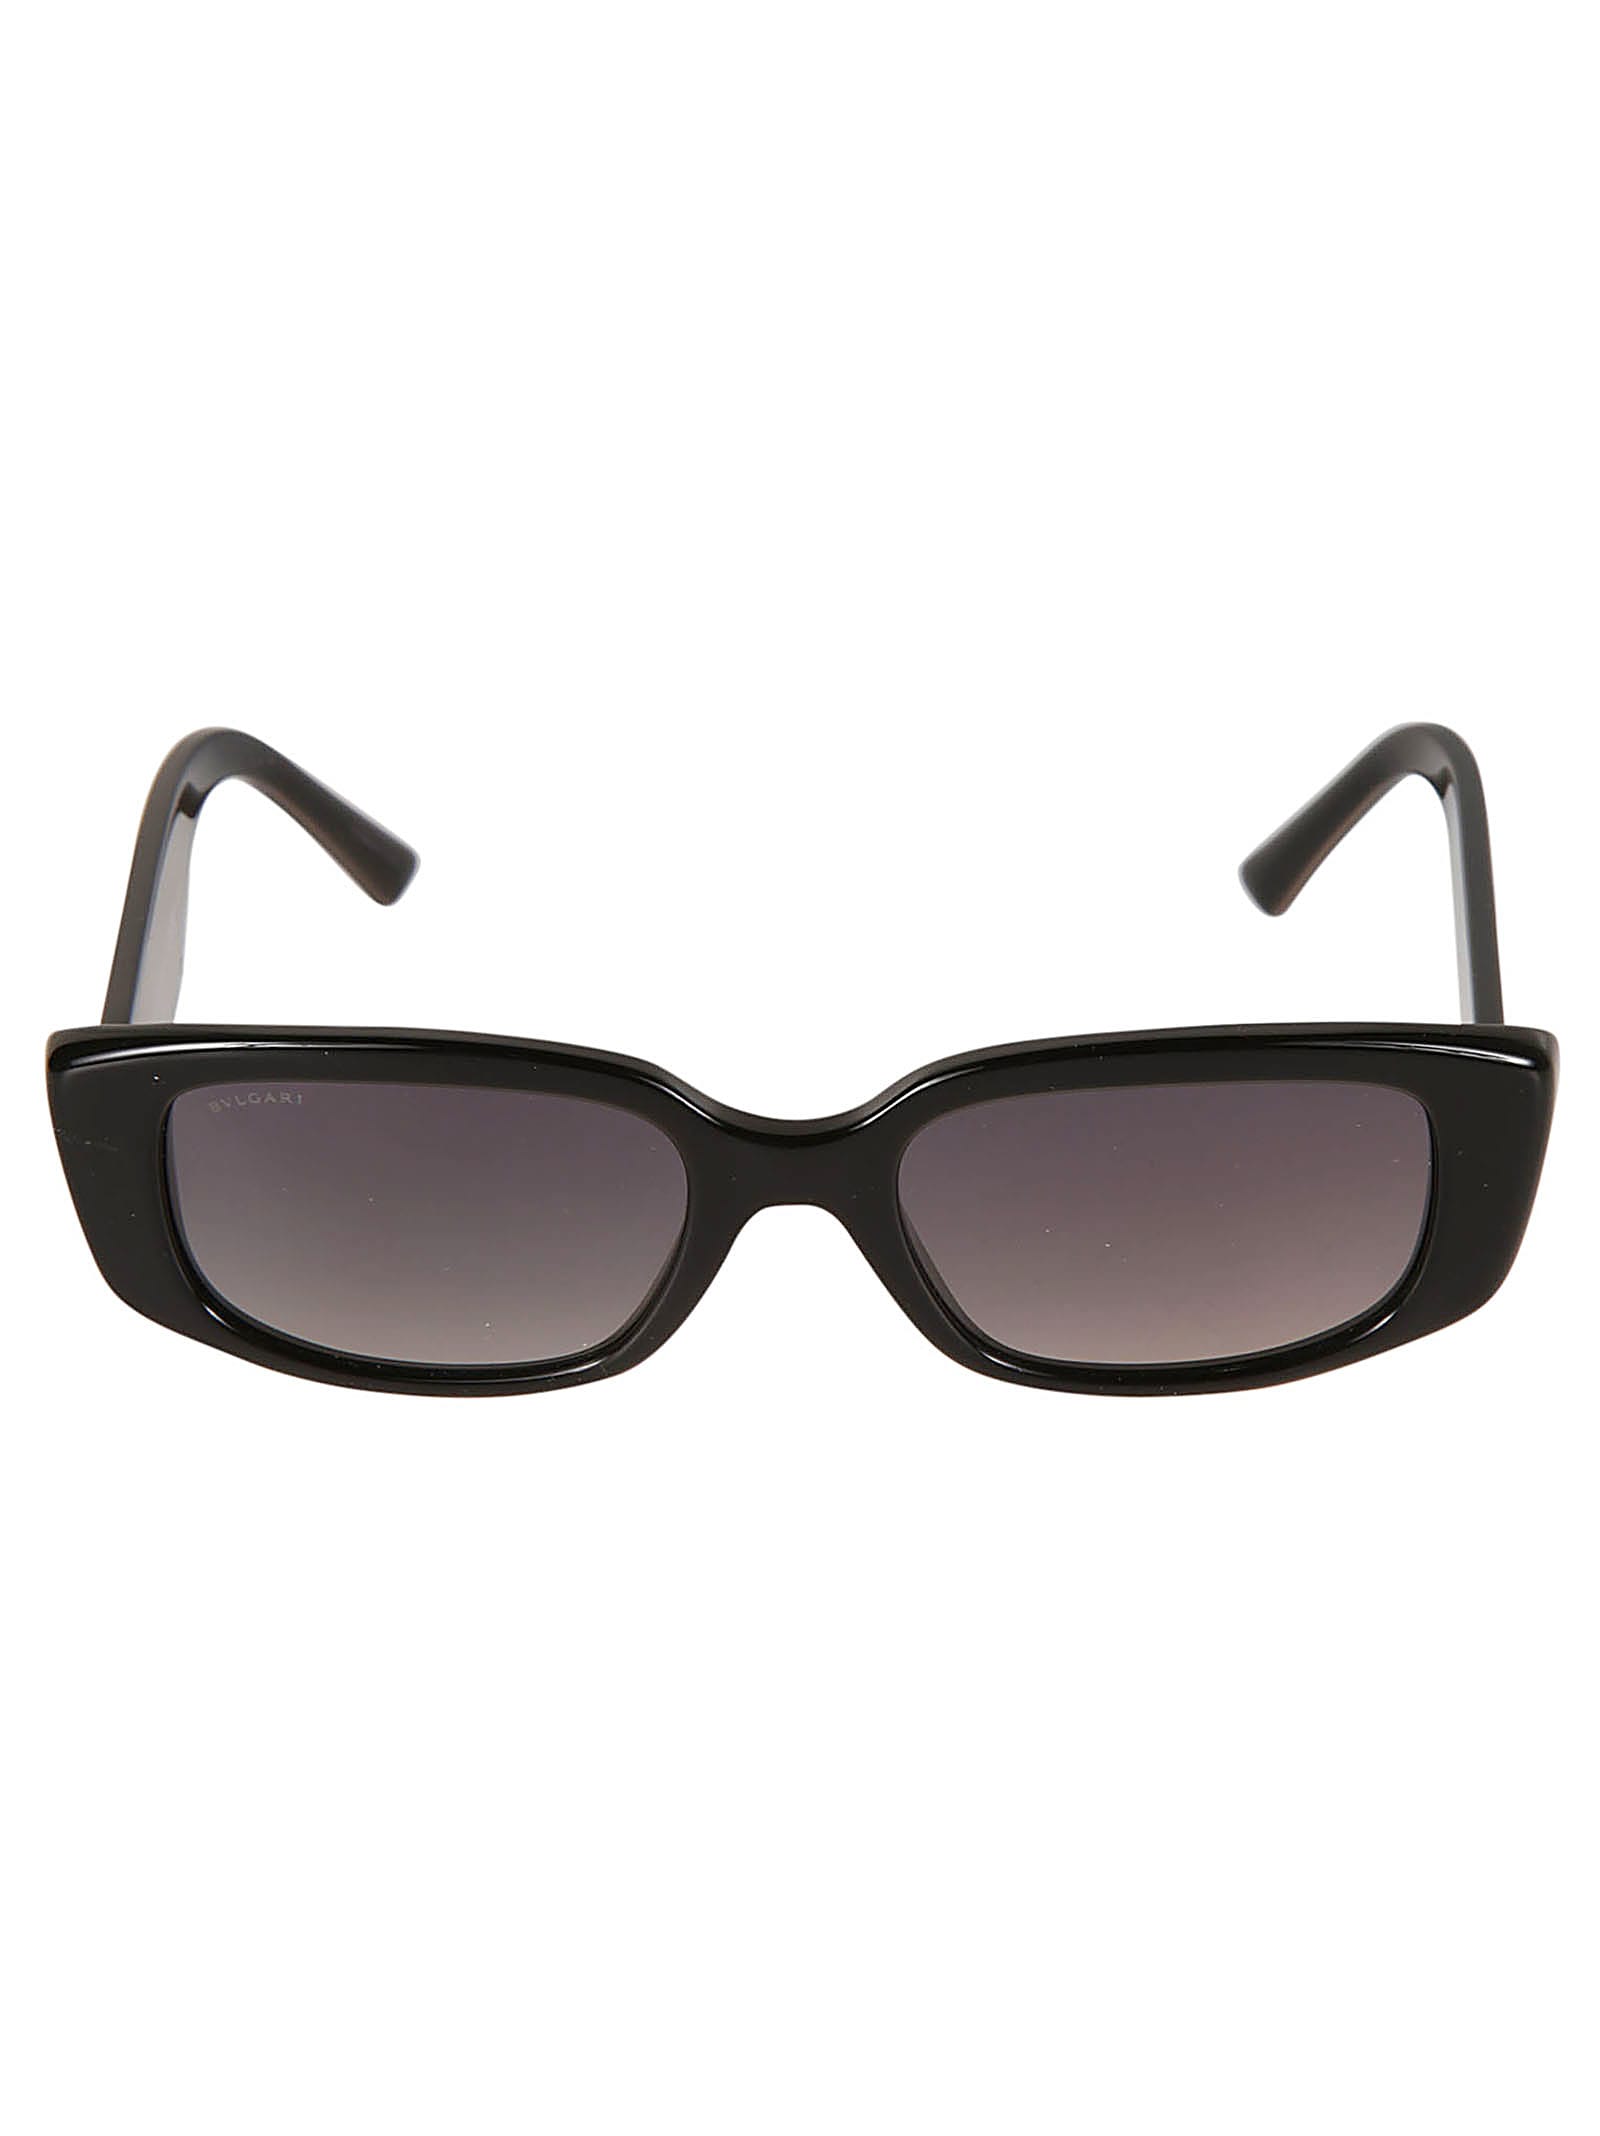 Bulgari Sole Sunglasses In 501/t3